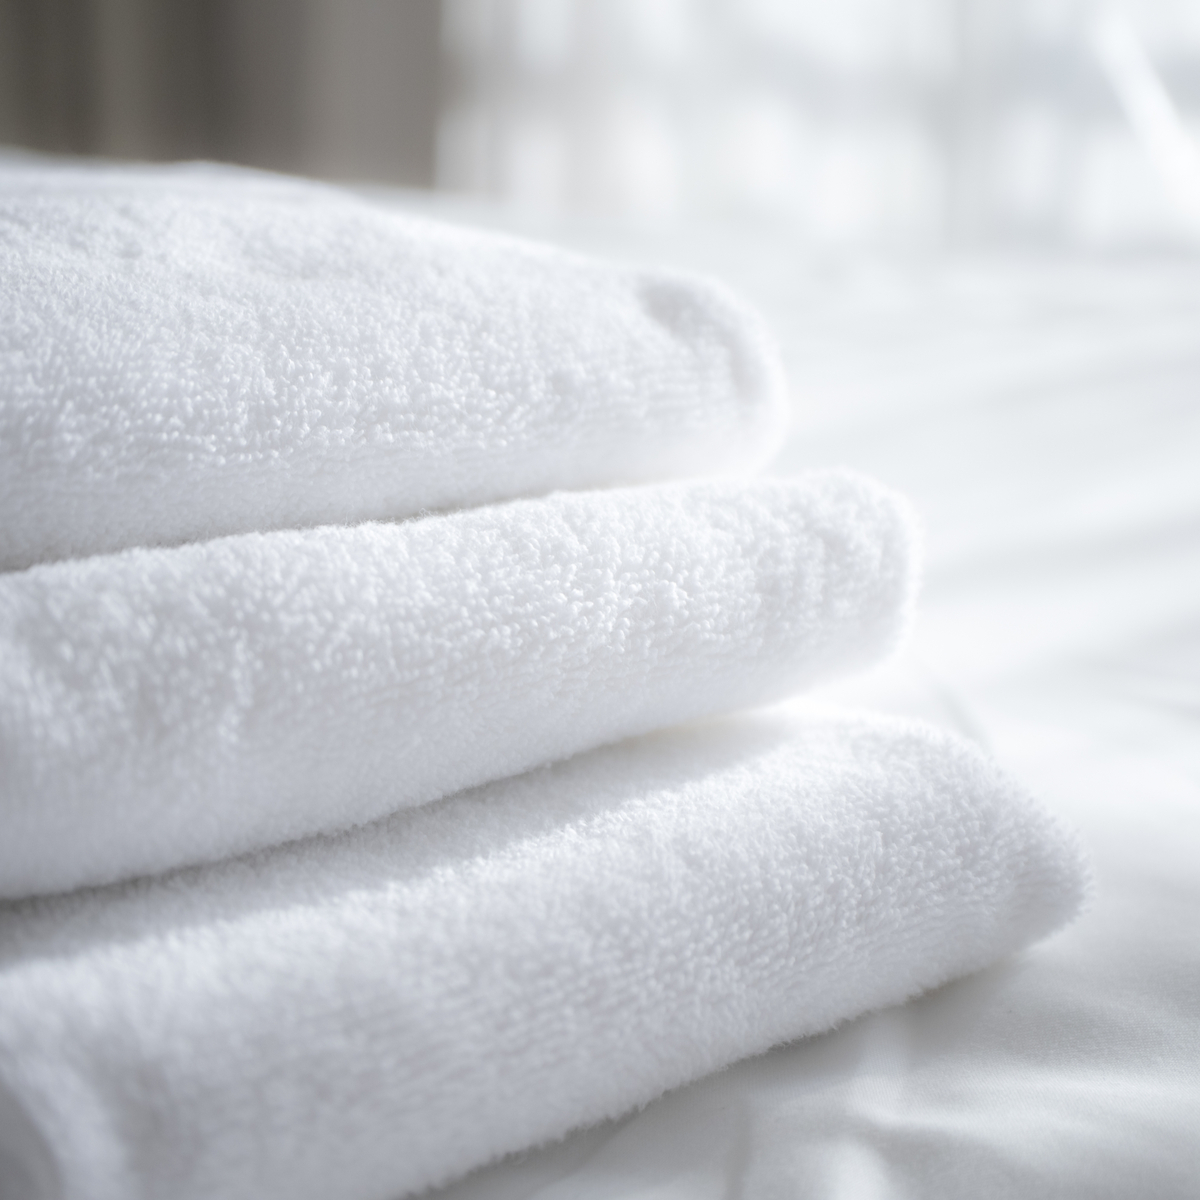 https://www.braunlinen.com/wp-content/uploads/2019/06/how-to-keep-towels-fluffy.jpg